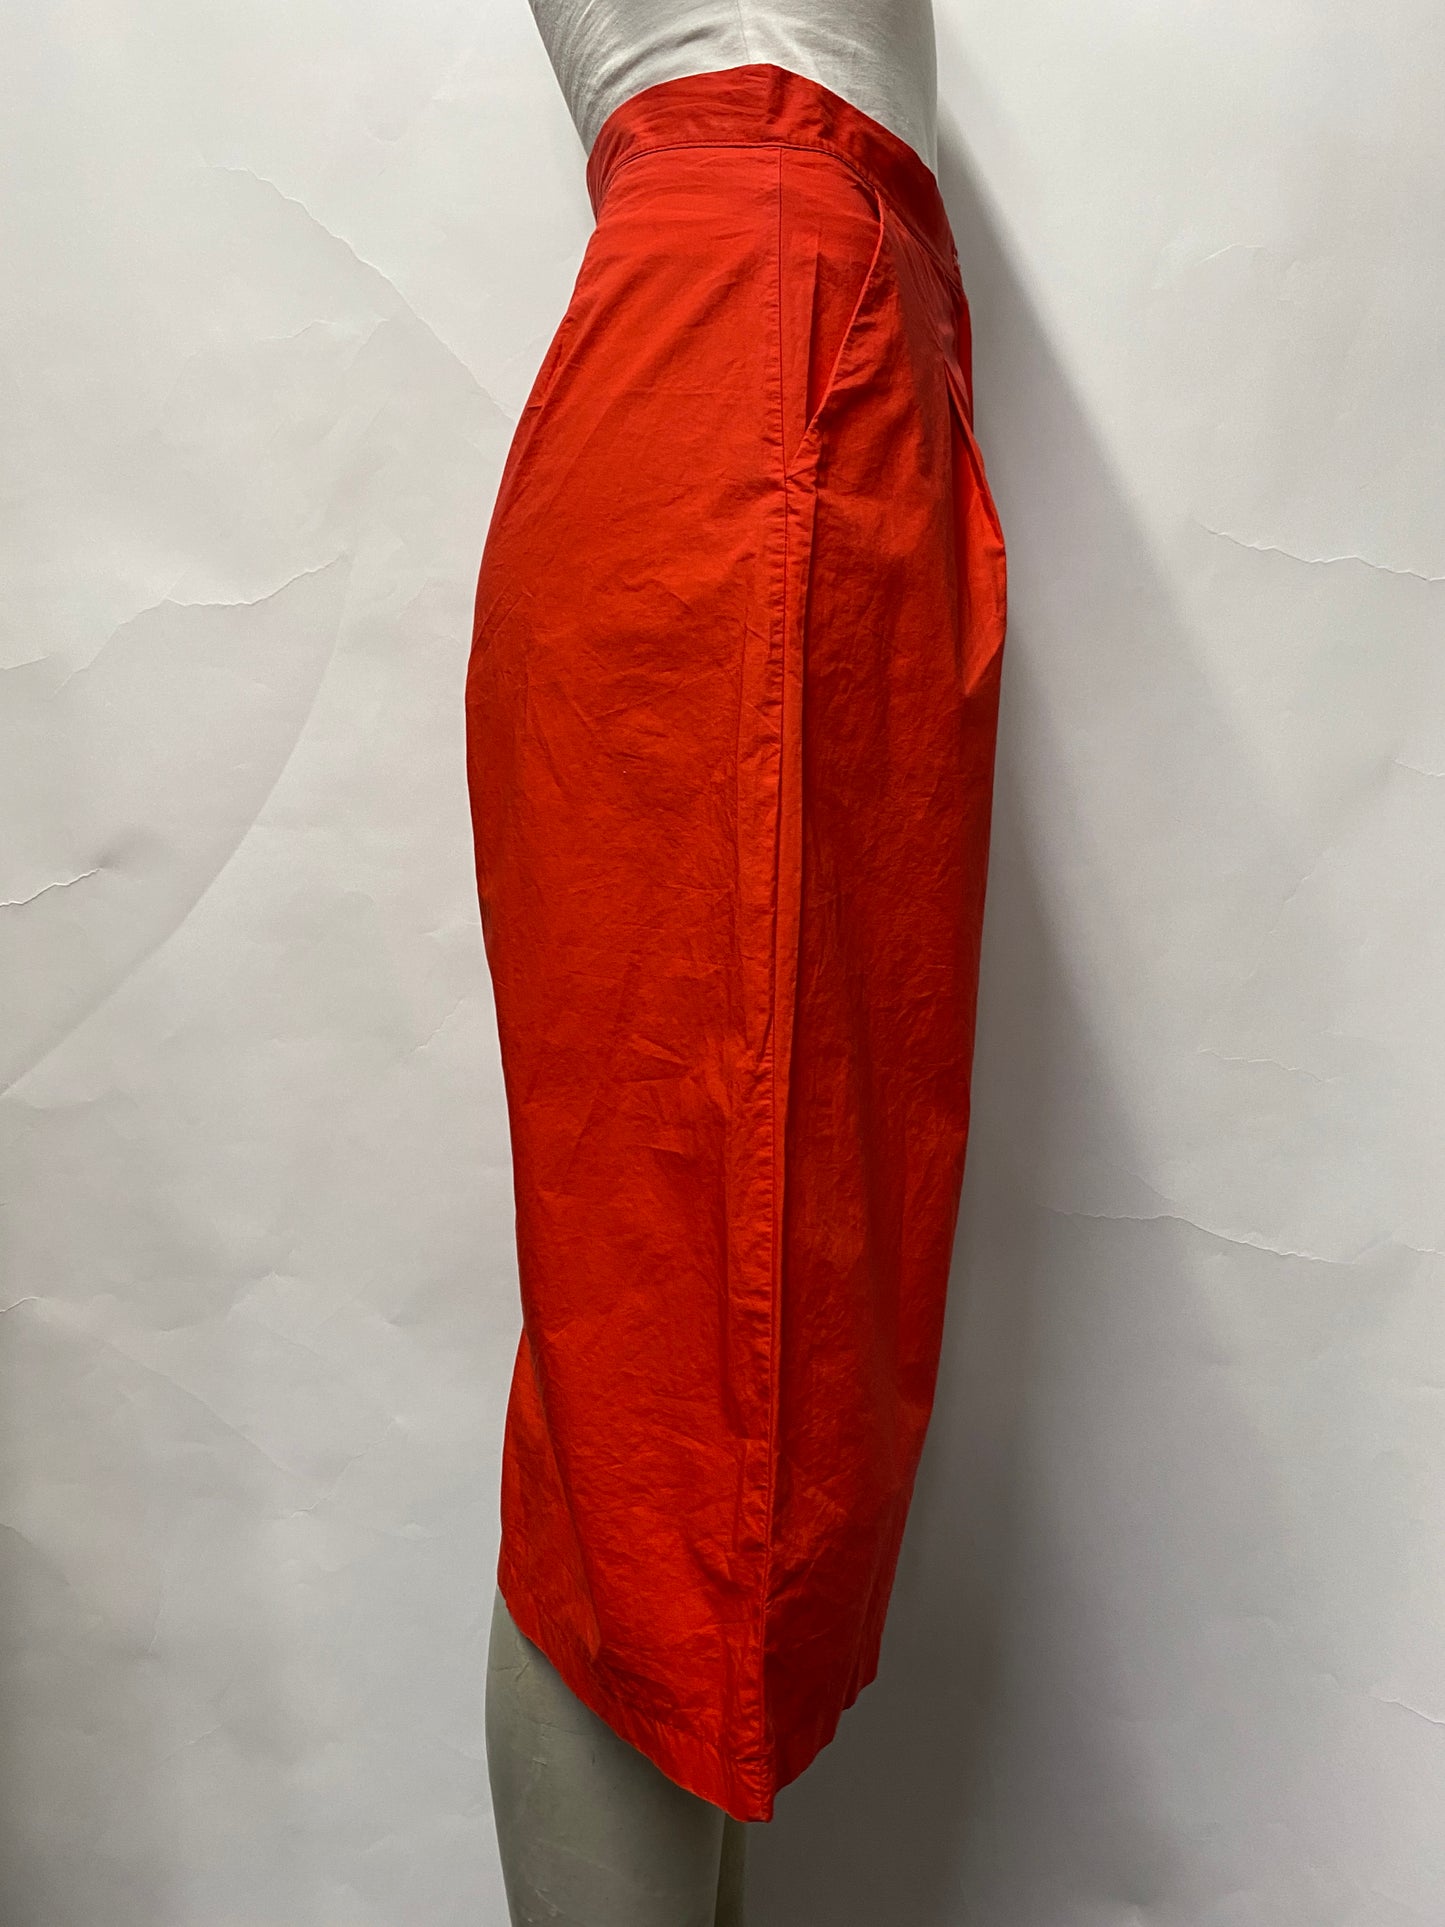 Floreiza Red 3/4 Length Bermuda Shorts Small